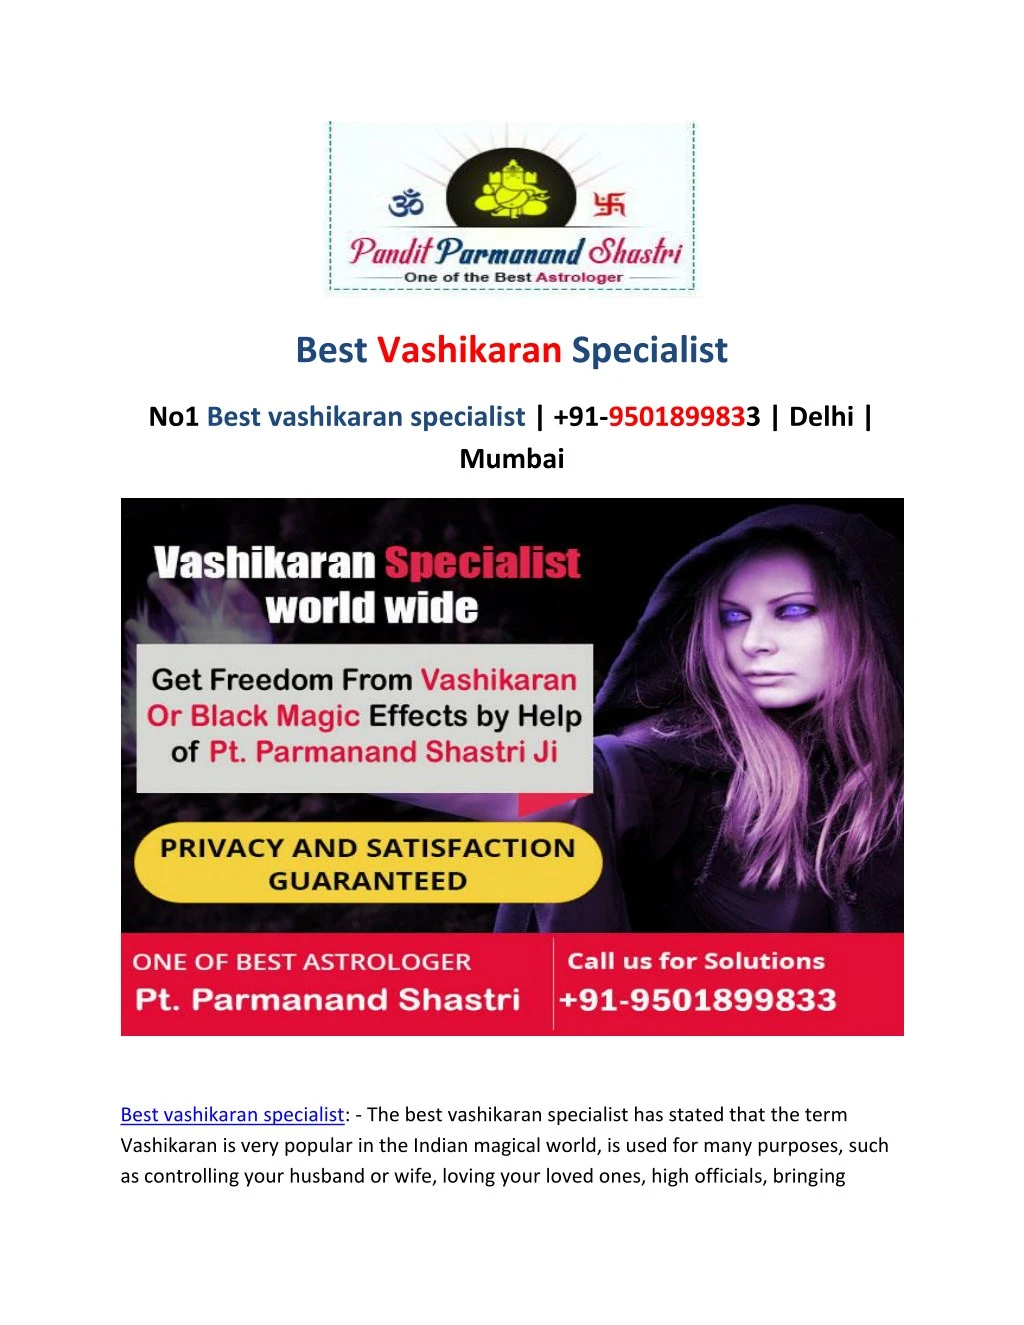 best vashikaran specialist